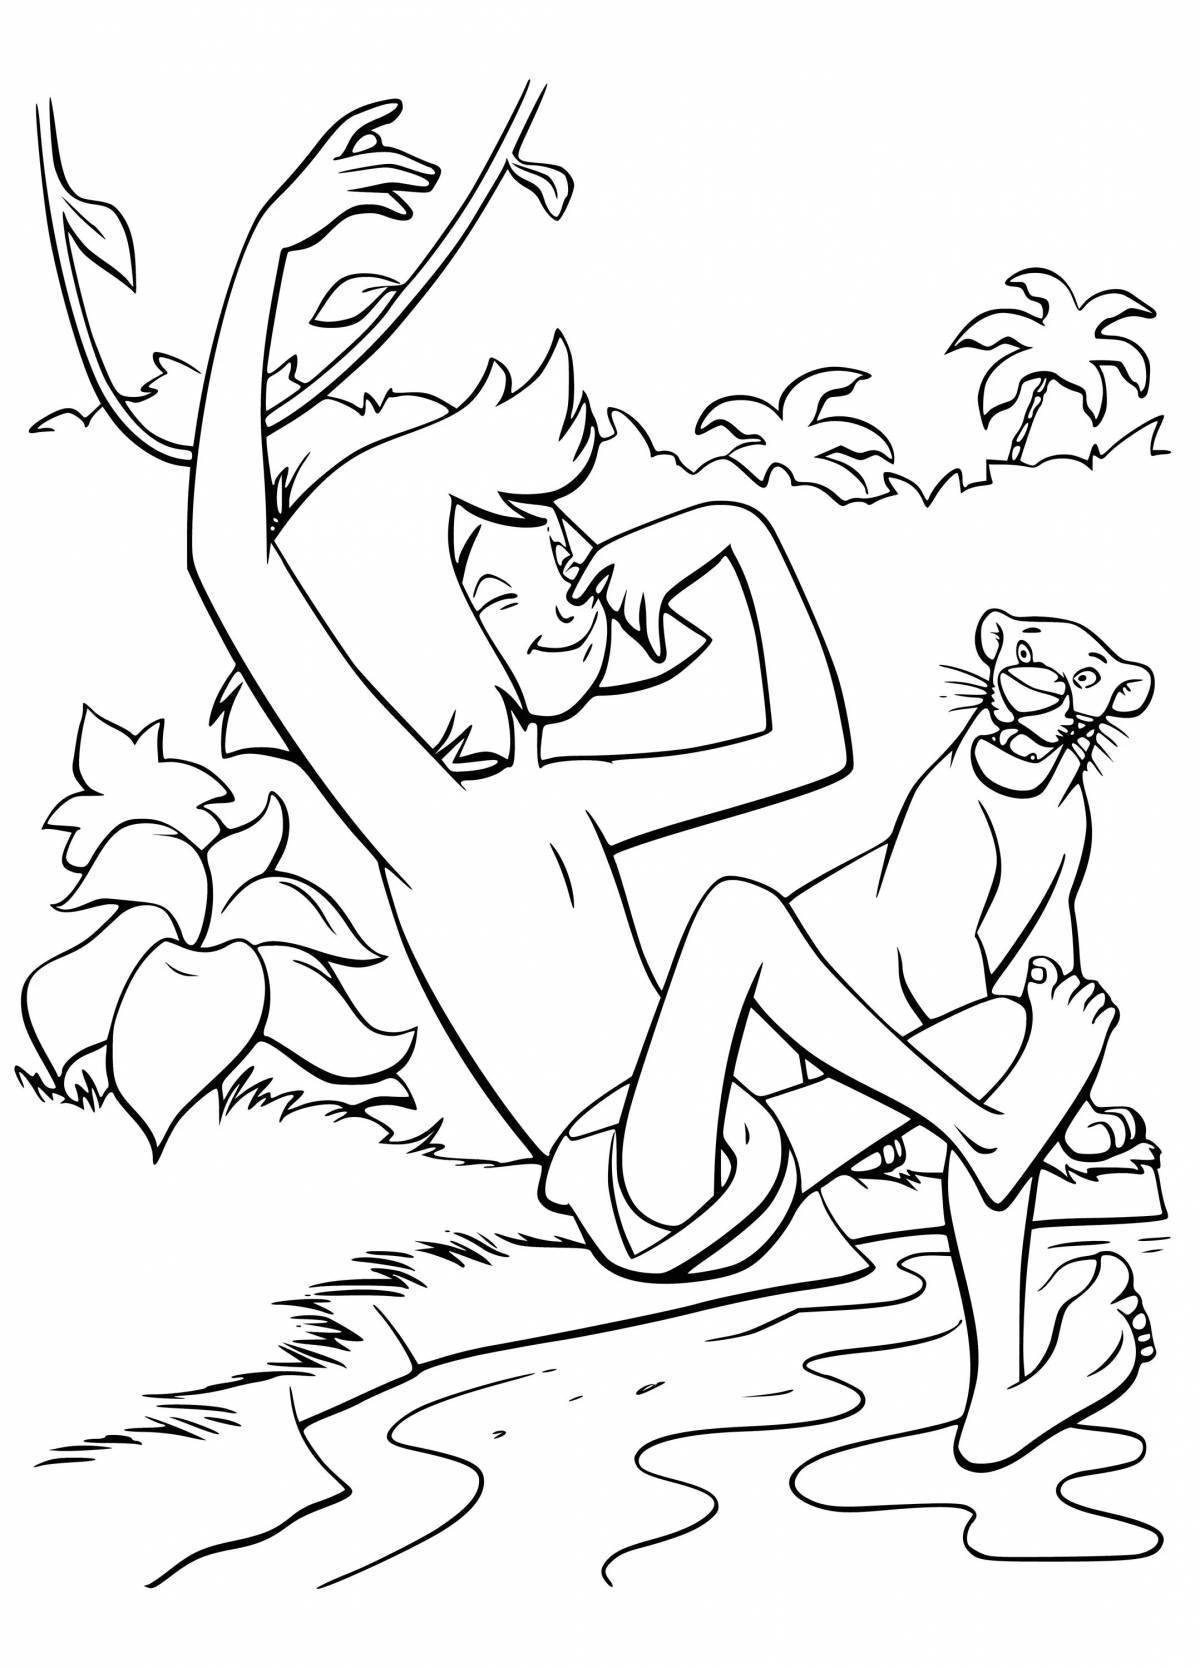 Crazy Mowgli coloring page